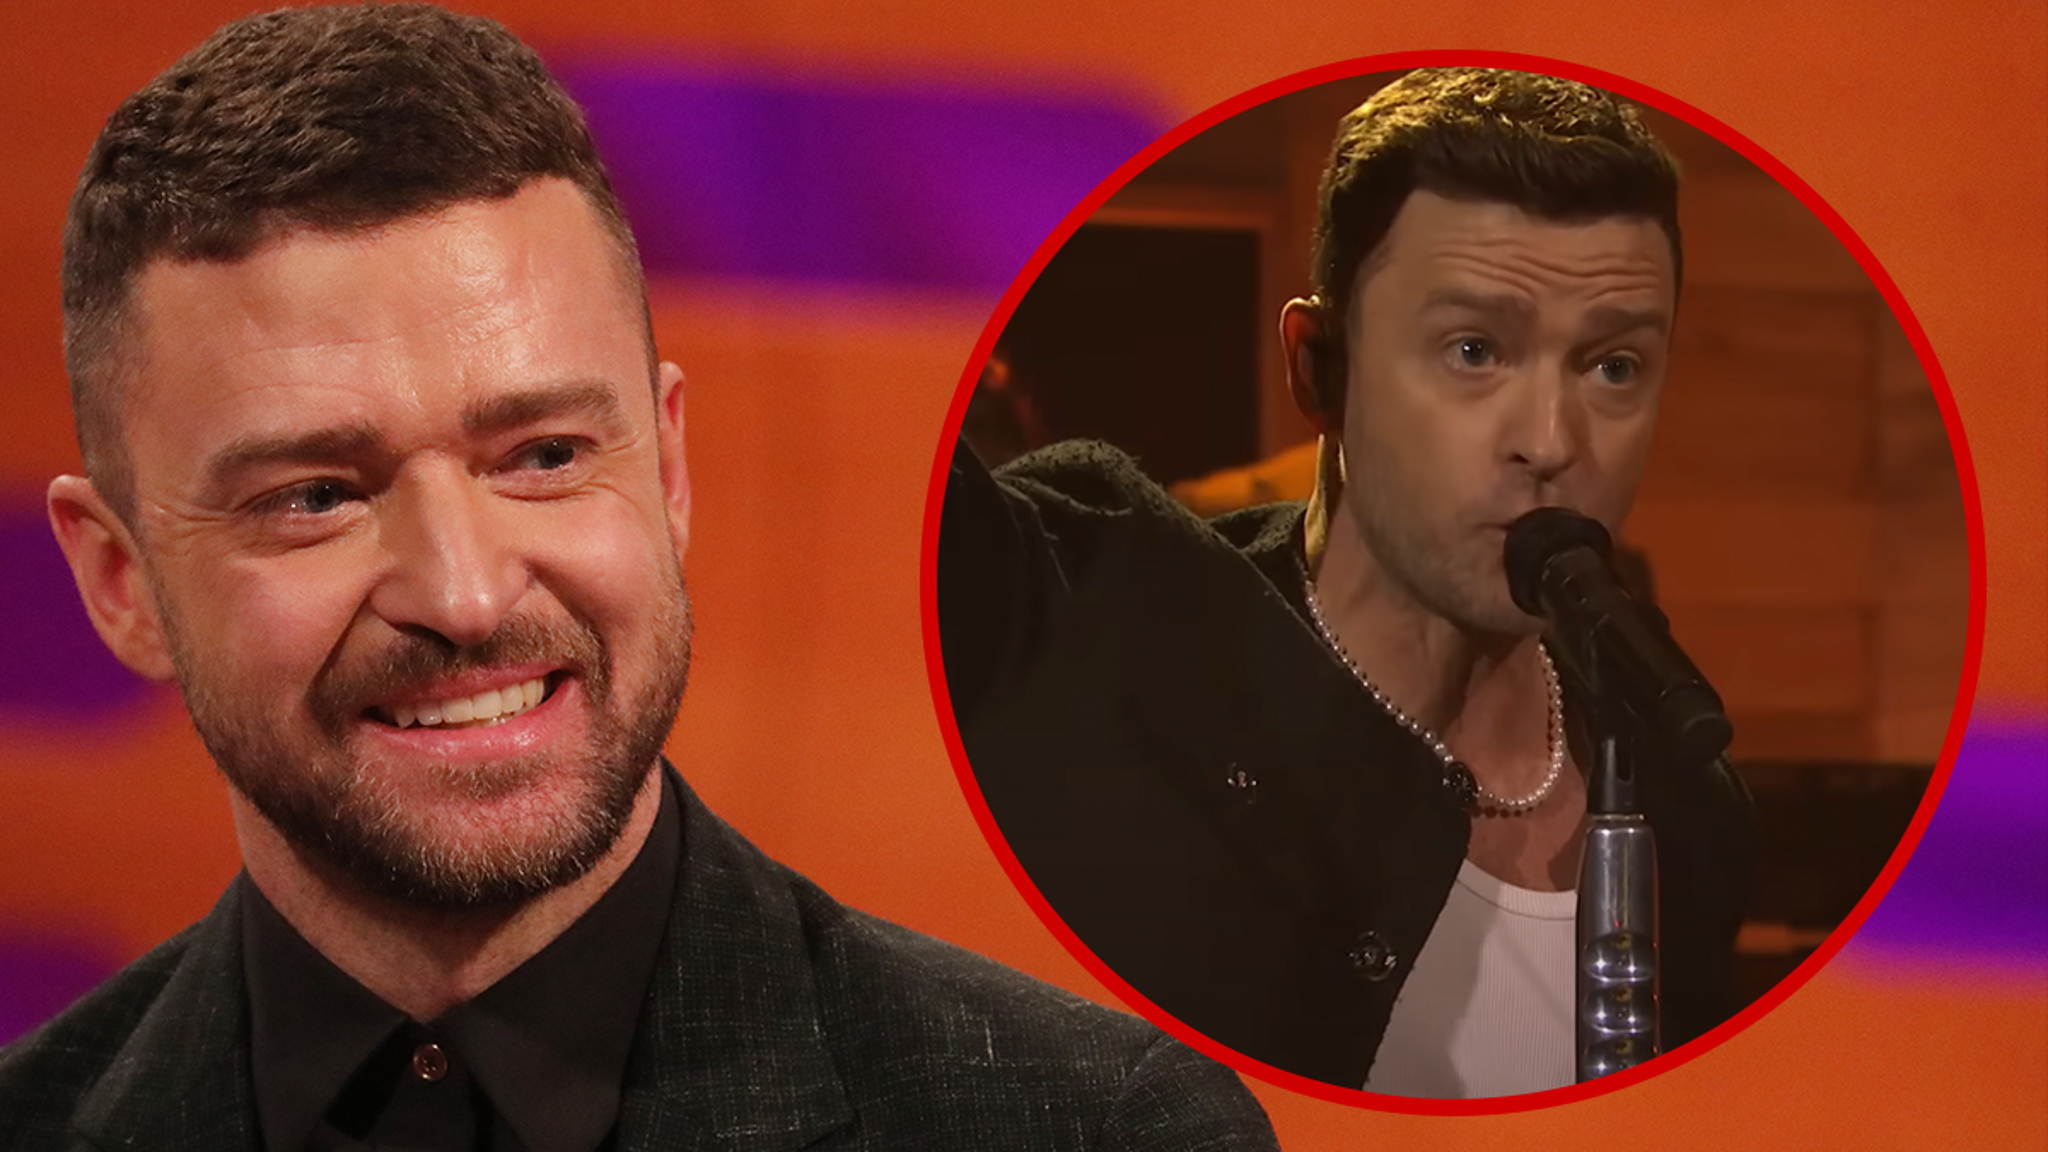 Justin Timberlake sings "Sanctified" from the album "EITIW" on "SNL"